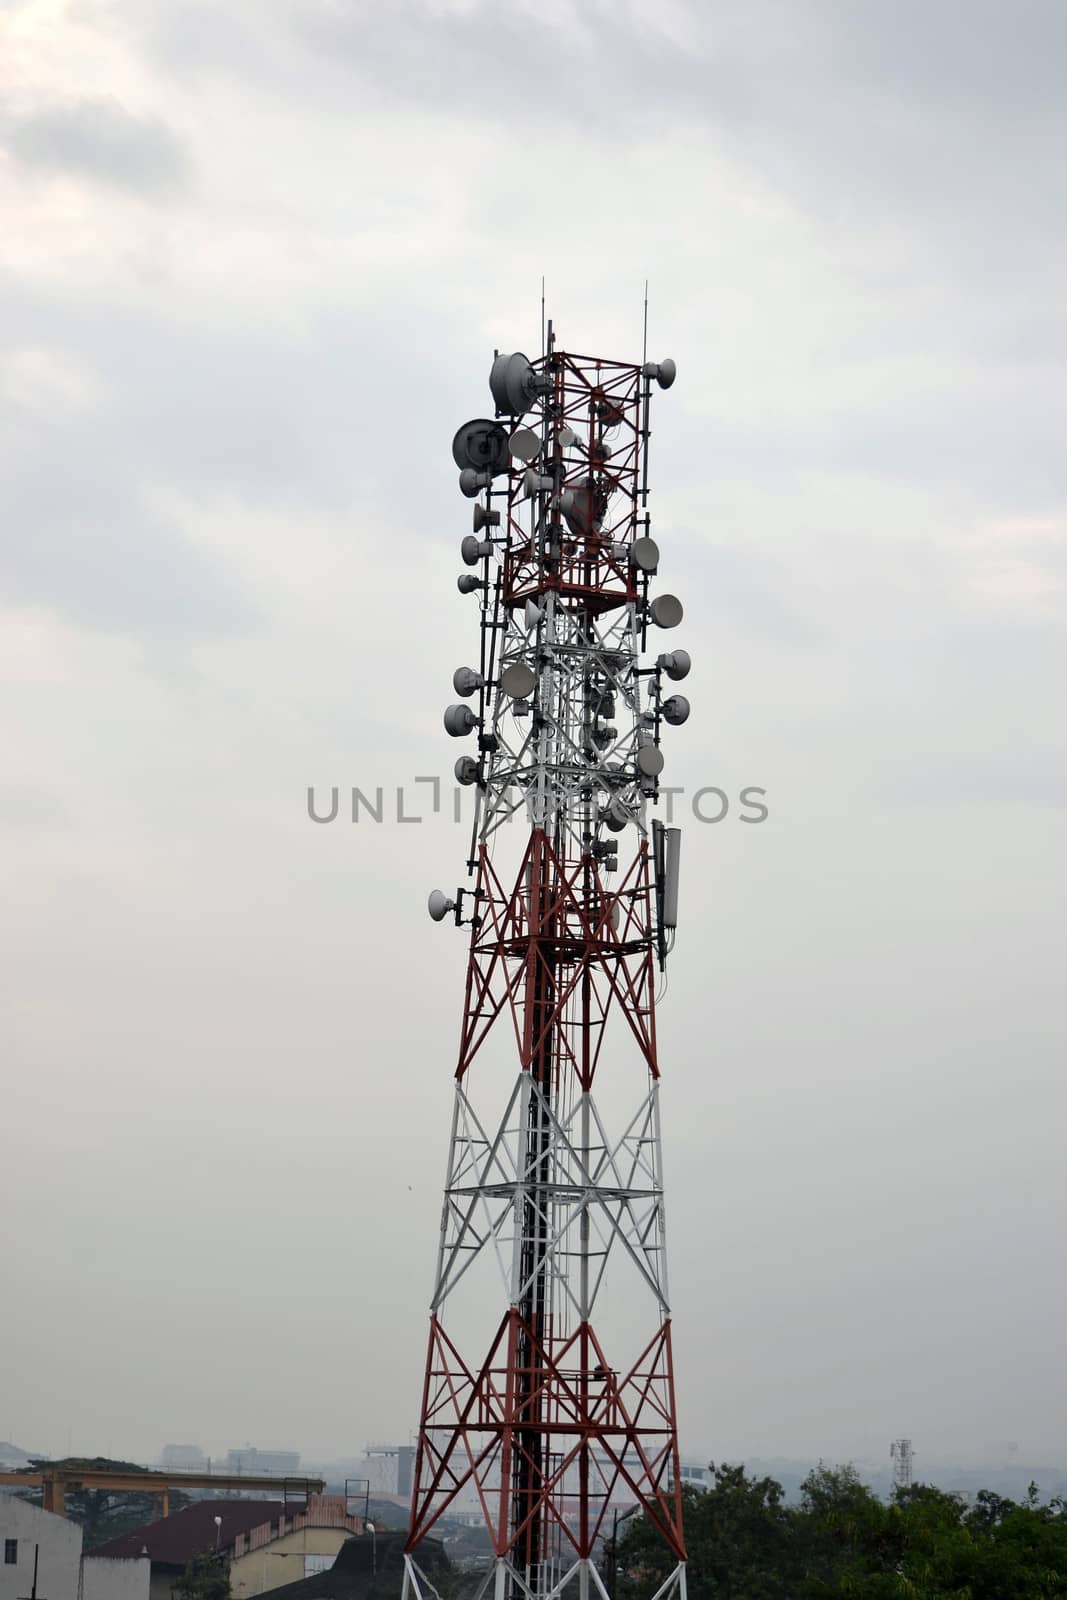 communication tower by bluemarine